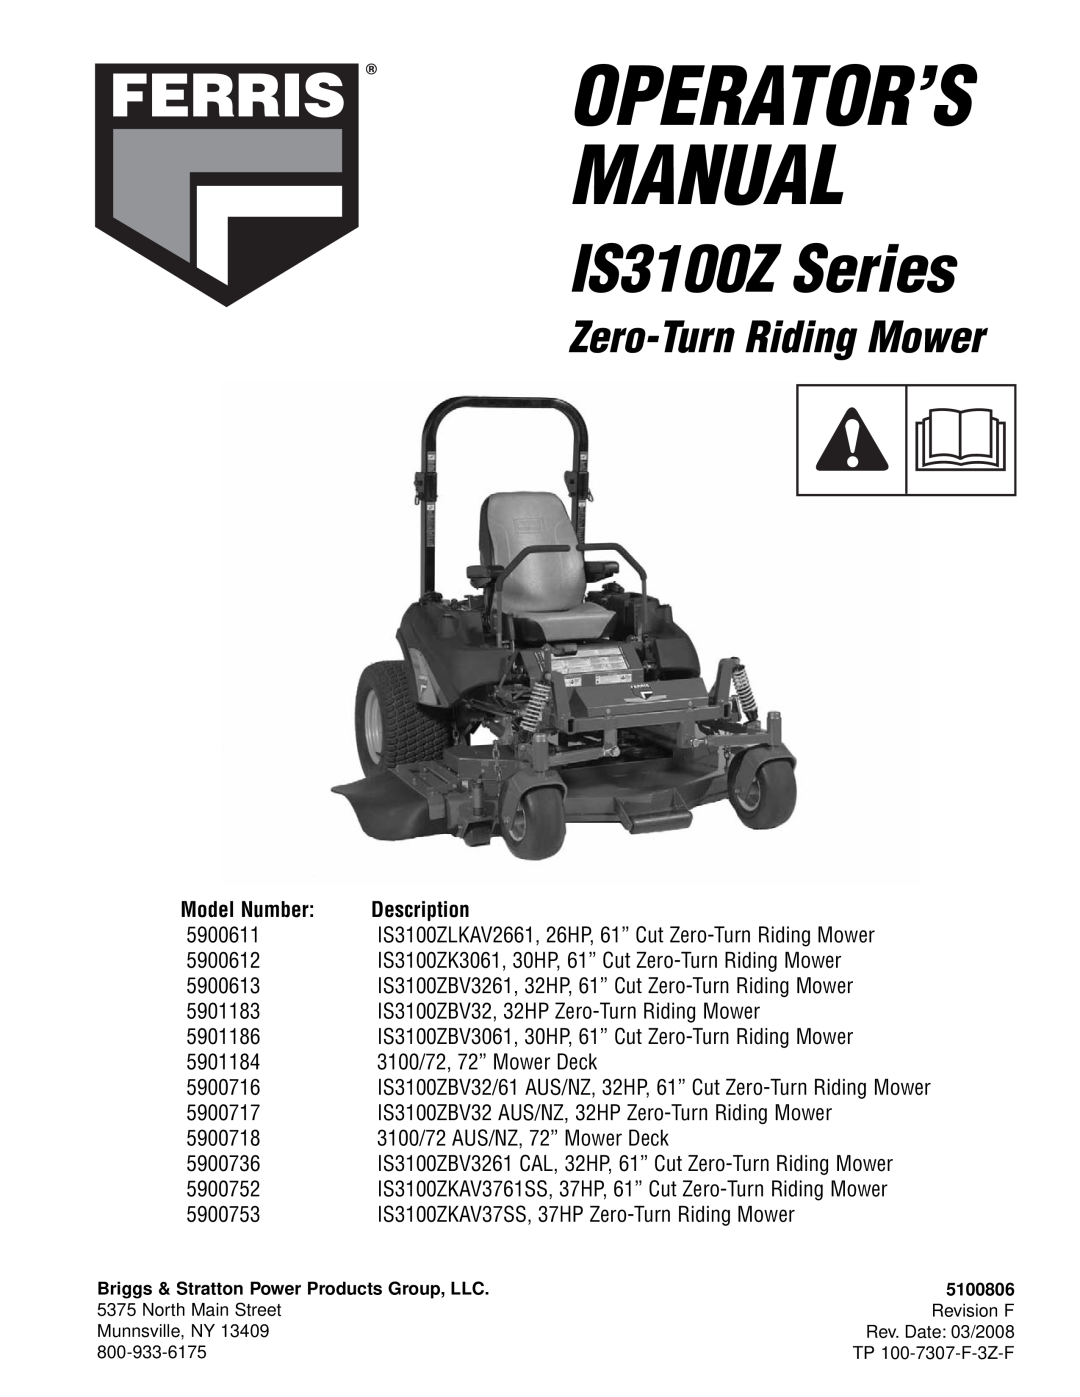 Briggs & Stratton 5901183, 5901186, 5901184 manual IS3100Z Series, Zero-Turn Riding Mower, Manual, Operator’S, Description 